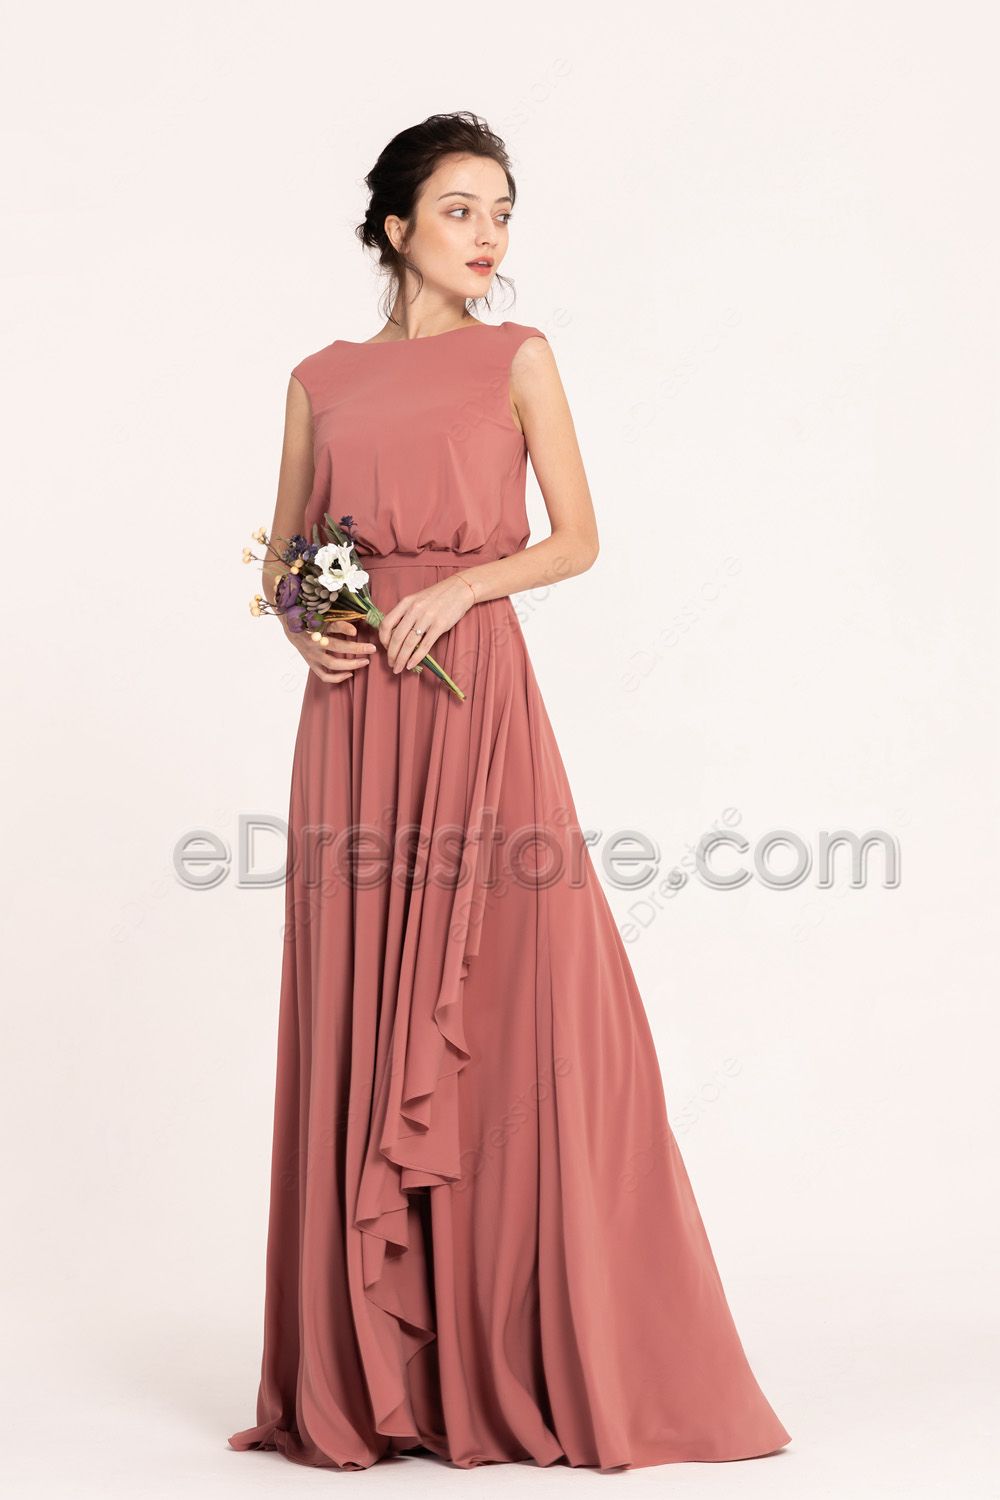 JJsHouse.com - Bridesmaid dresses of the same color scheme... | Facebook